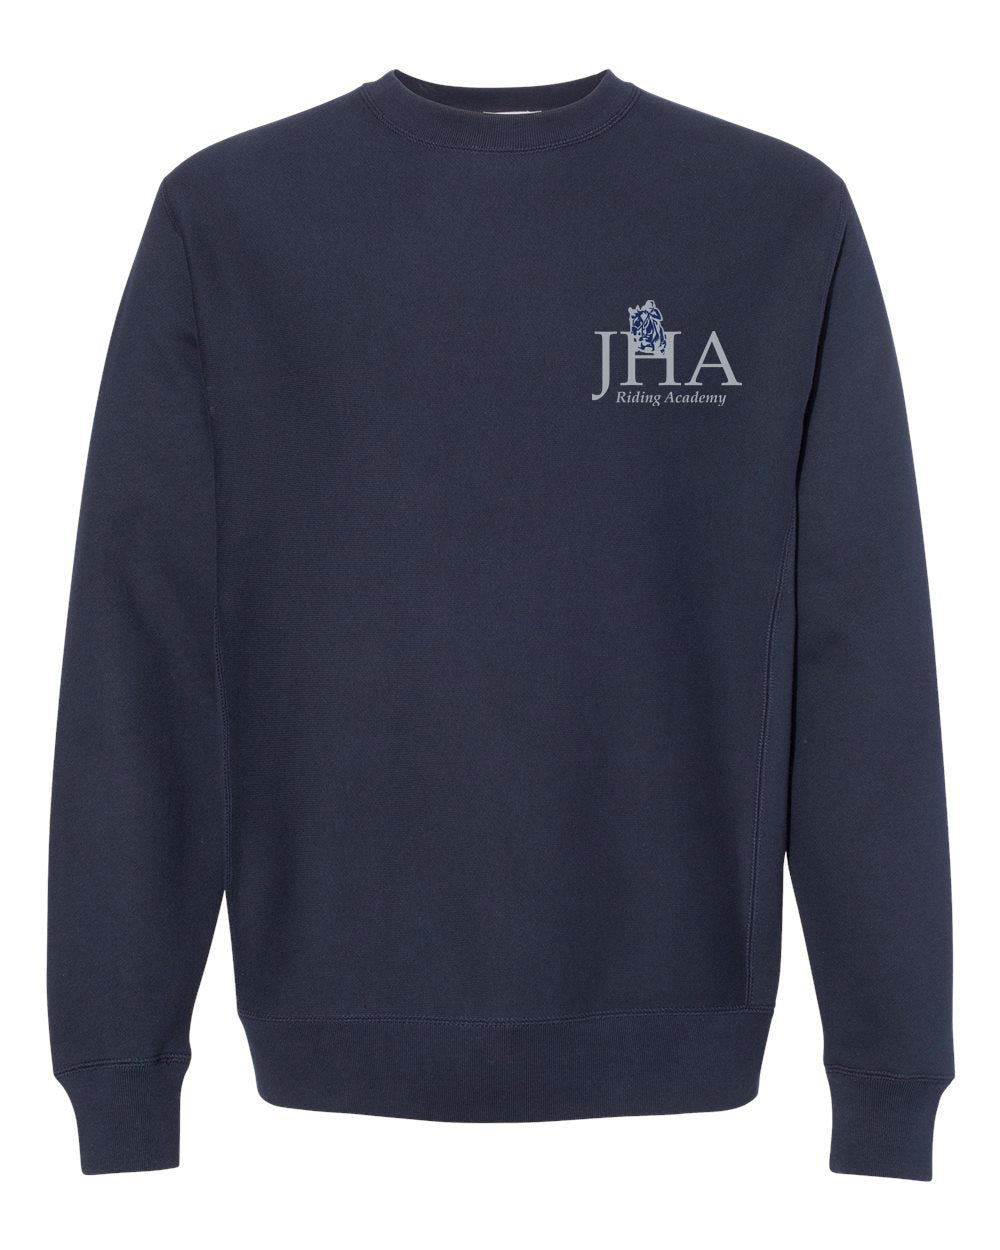 JHA Riding Academy - Heavyweight Cross-Grain Crewneck Sweatshirt